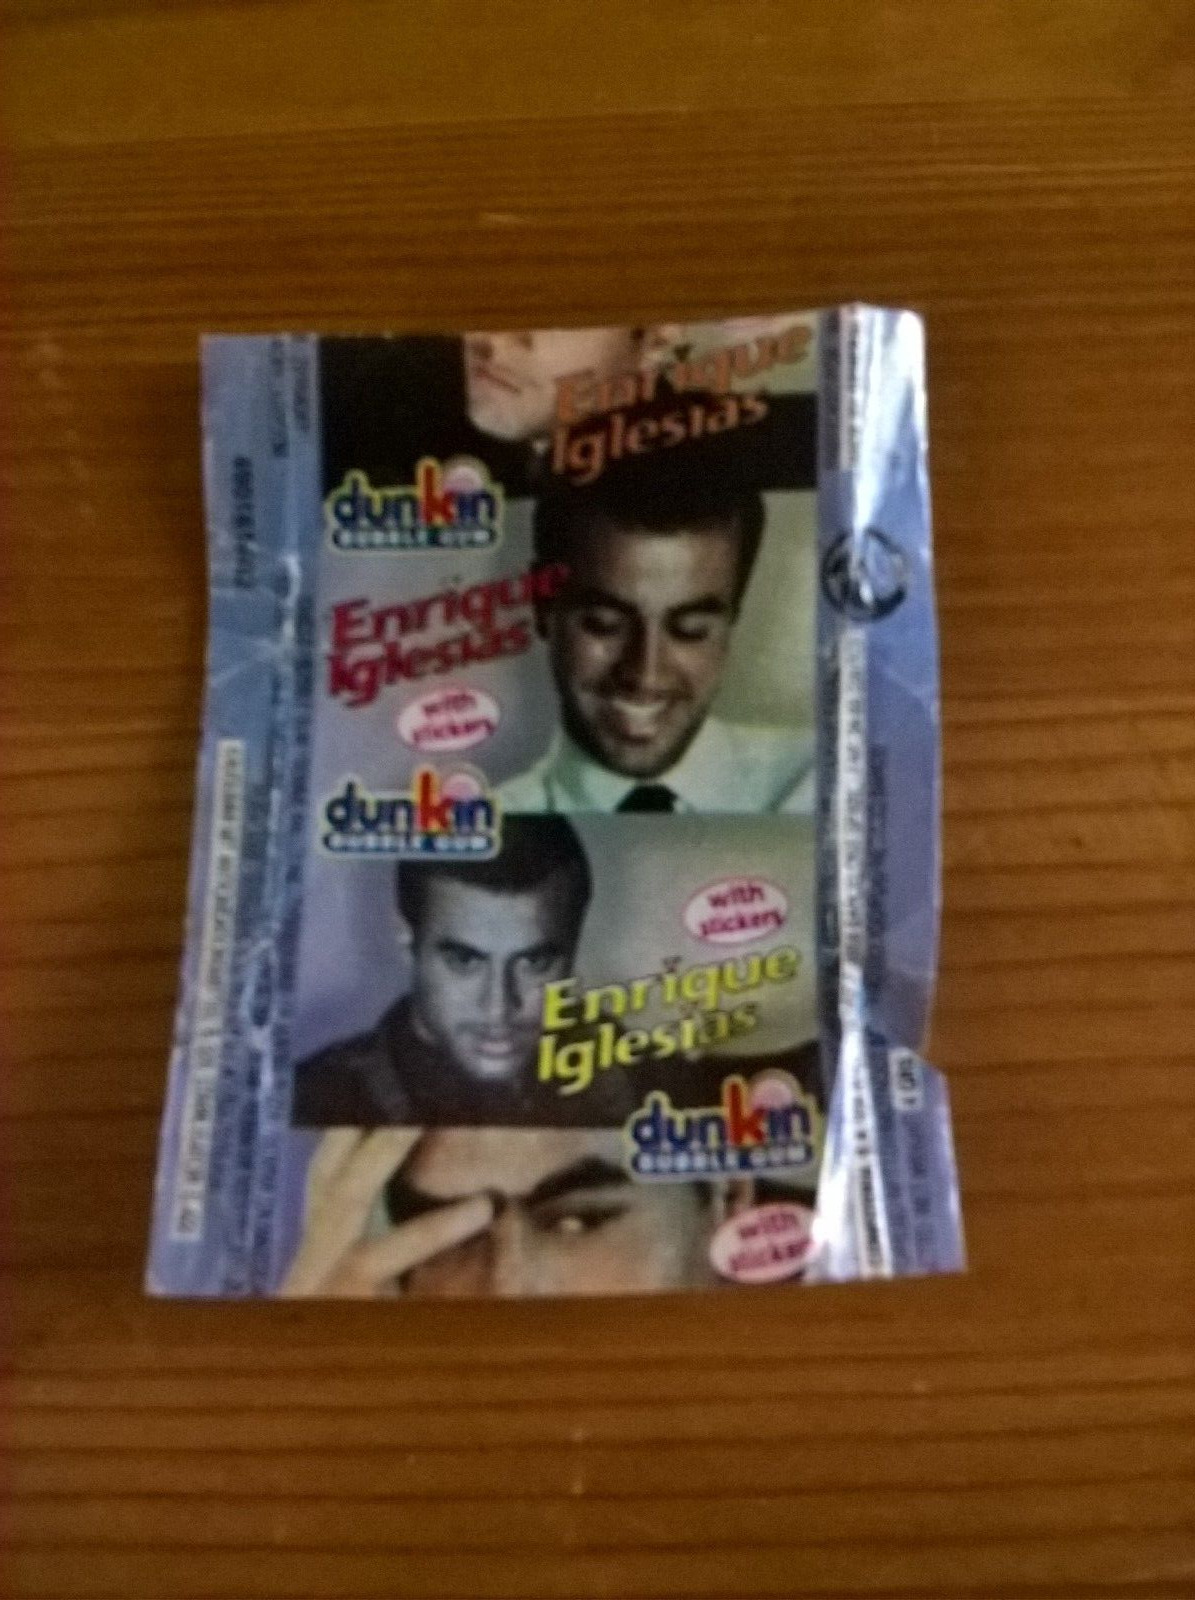 Empty wrapper for Dunkin Enrique Iglesias bubble gum stickers